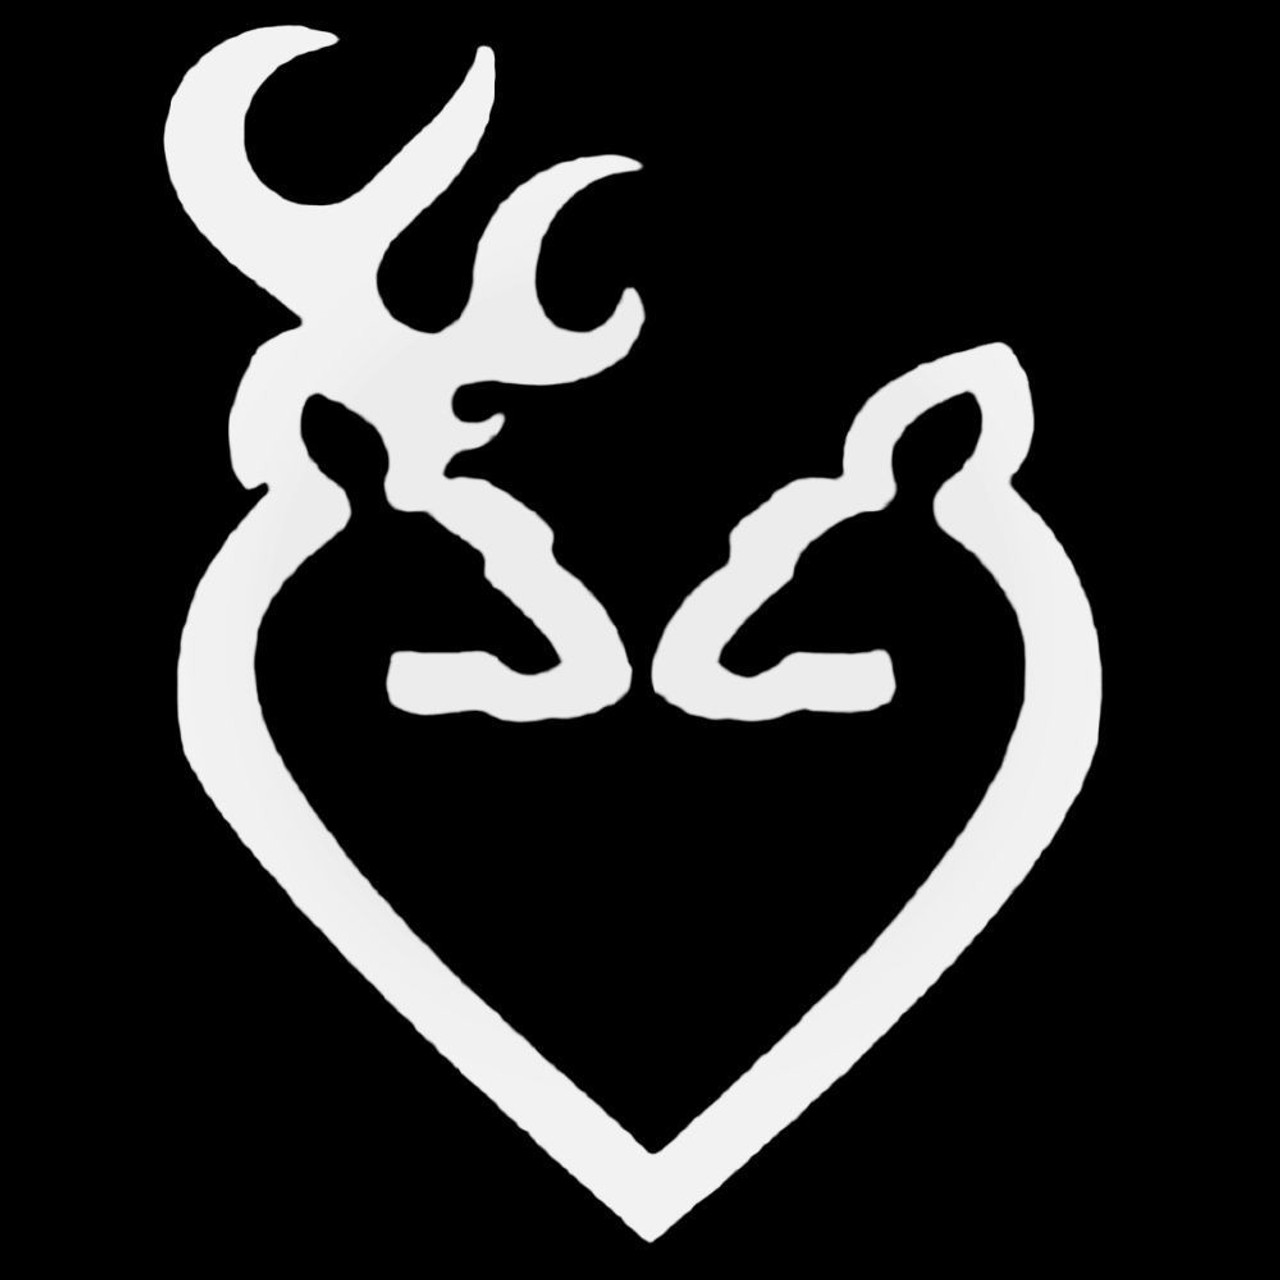 browning deer logo heart